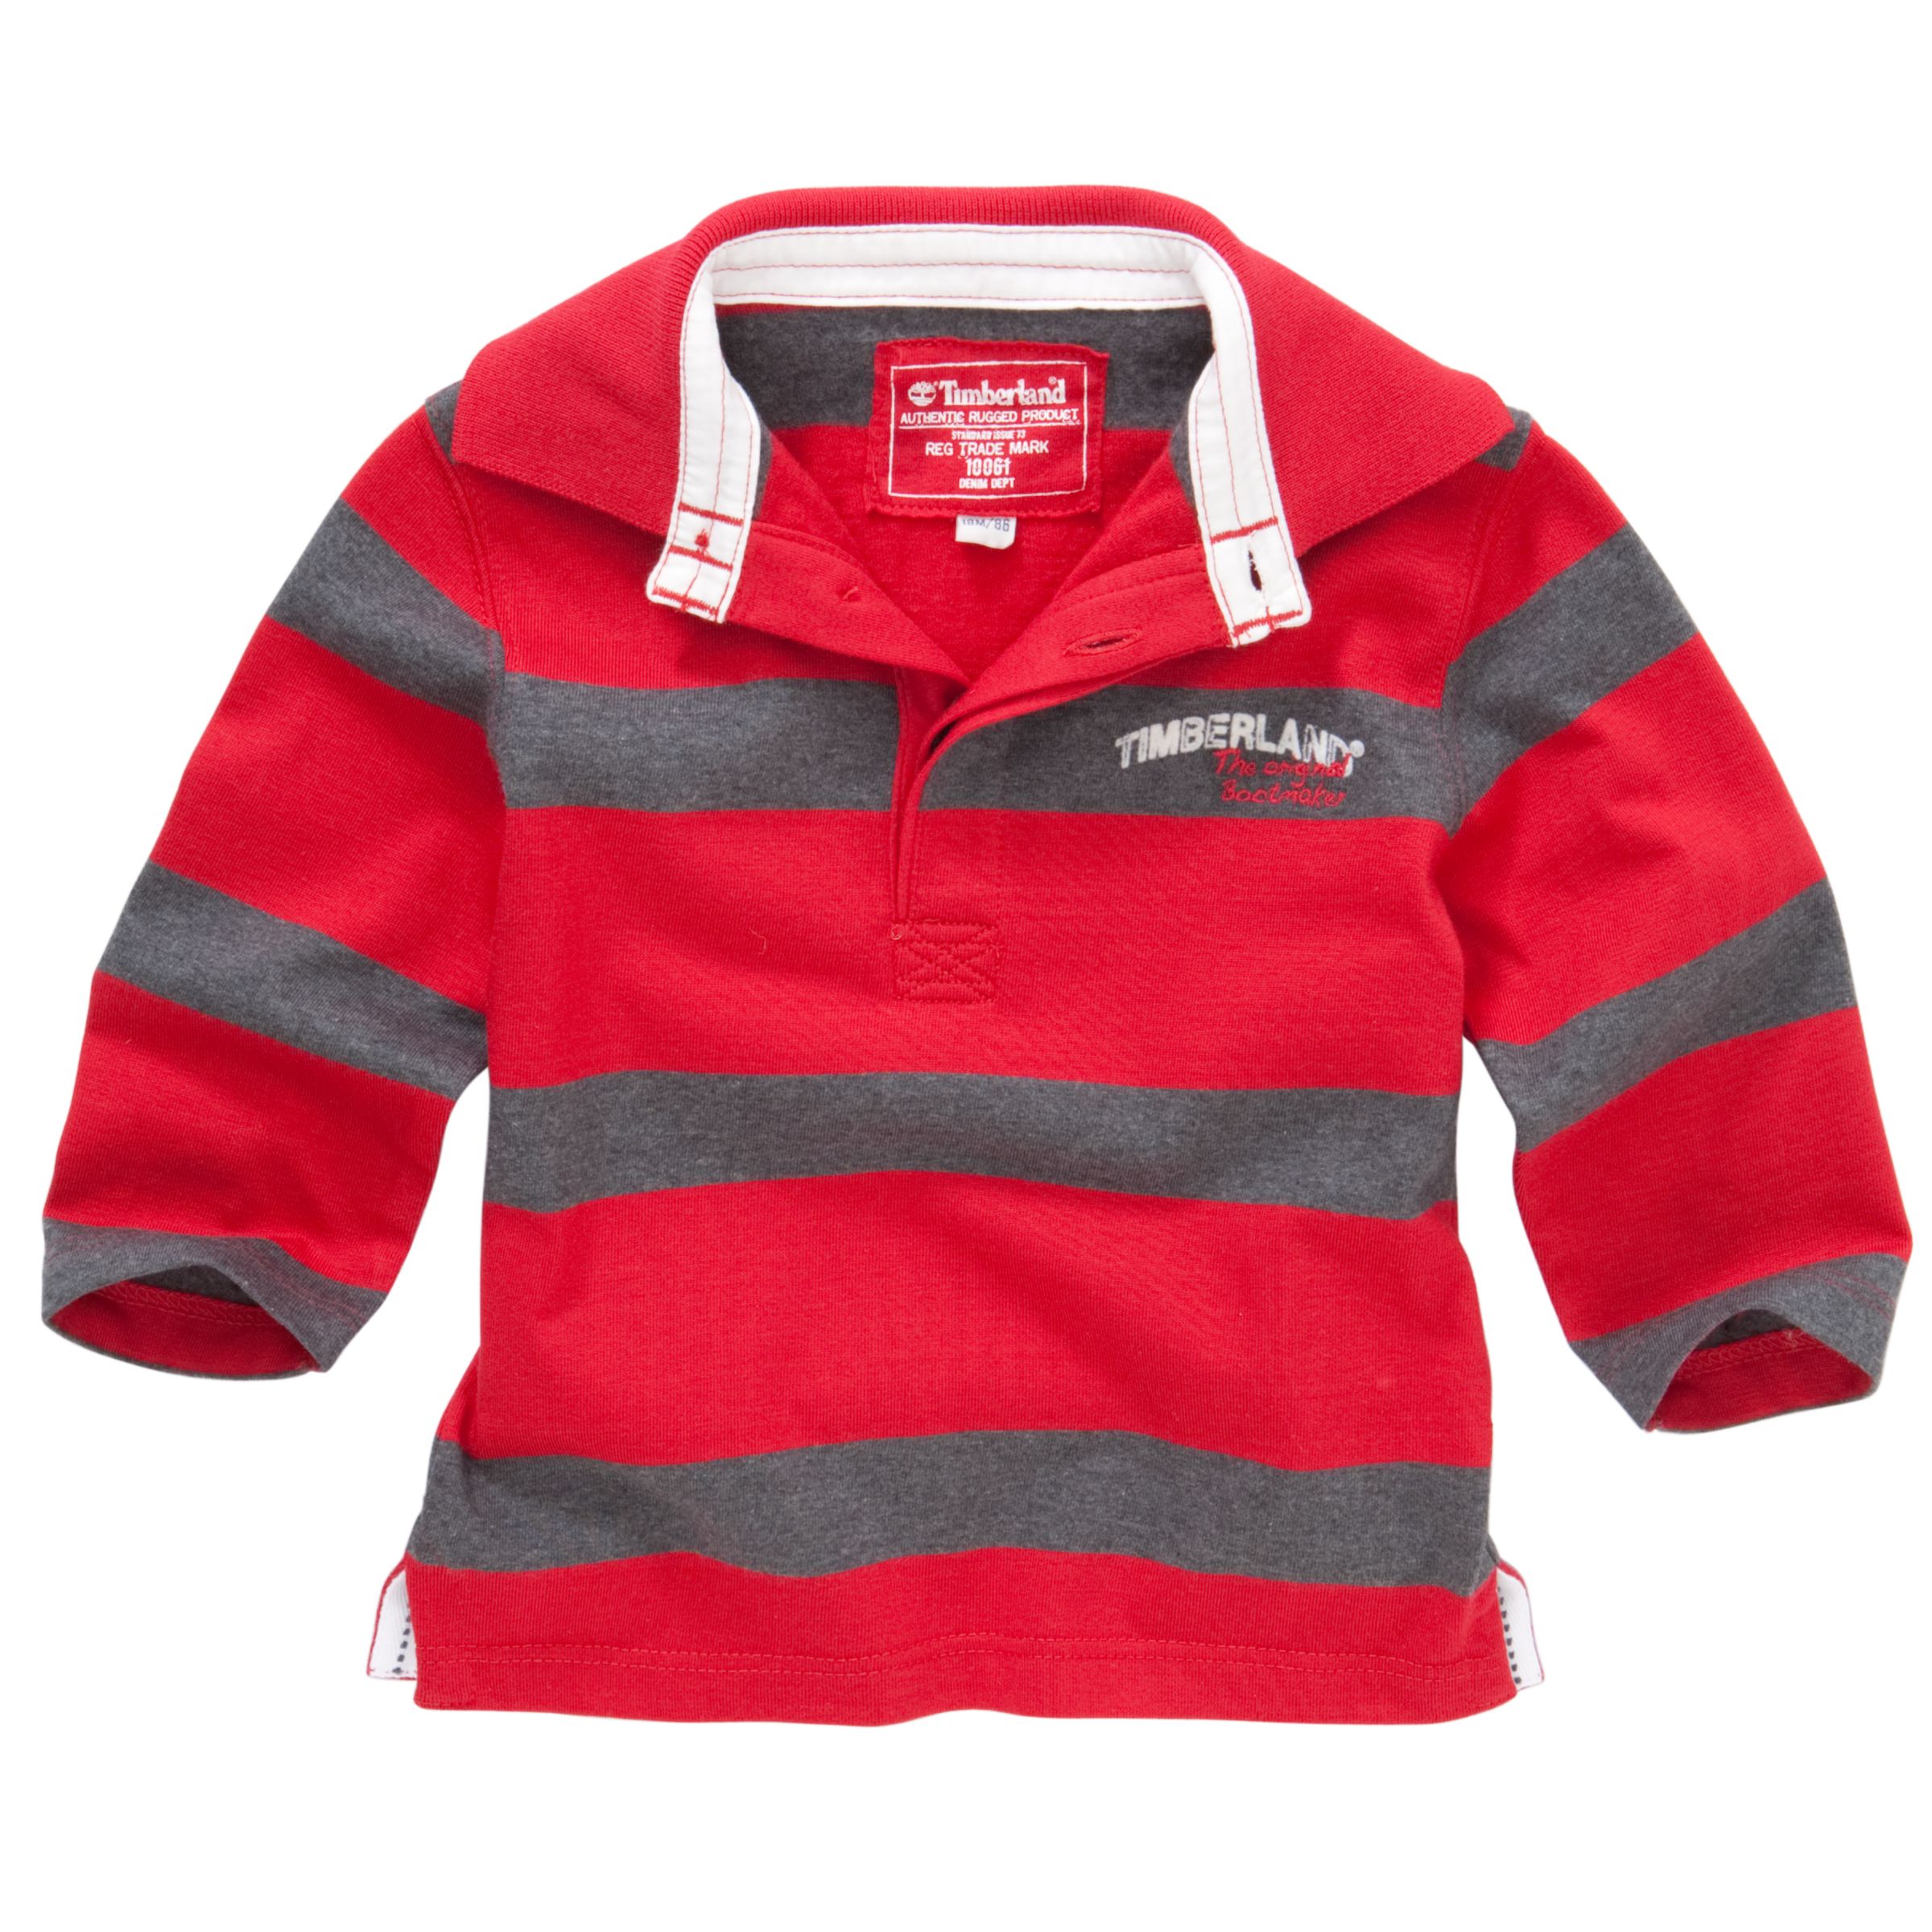 Timberland Stripe Print Long Sleeve Rugby Shirt,